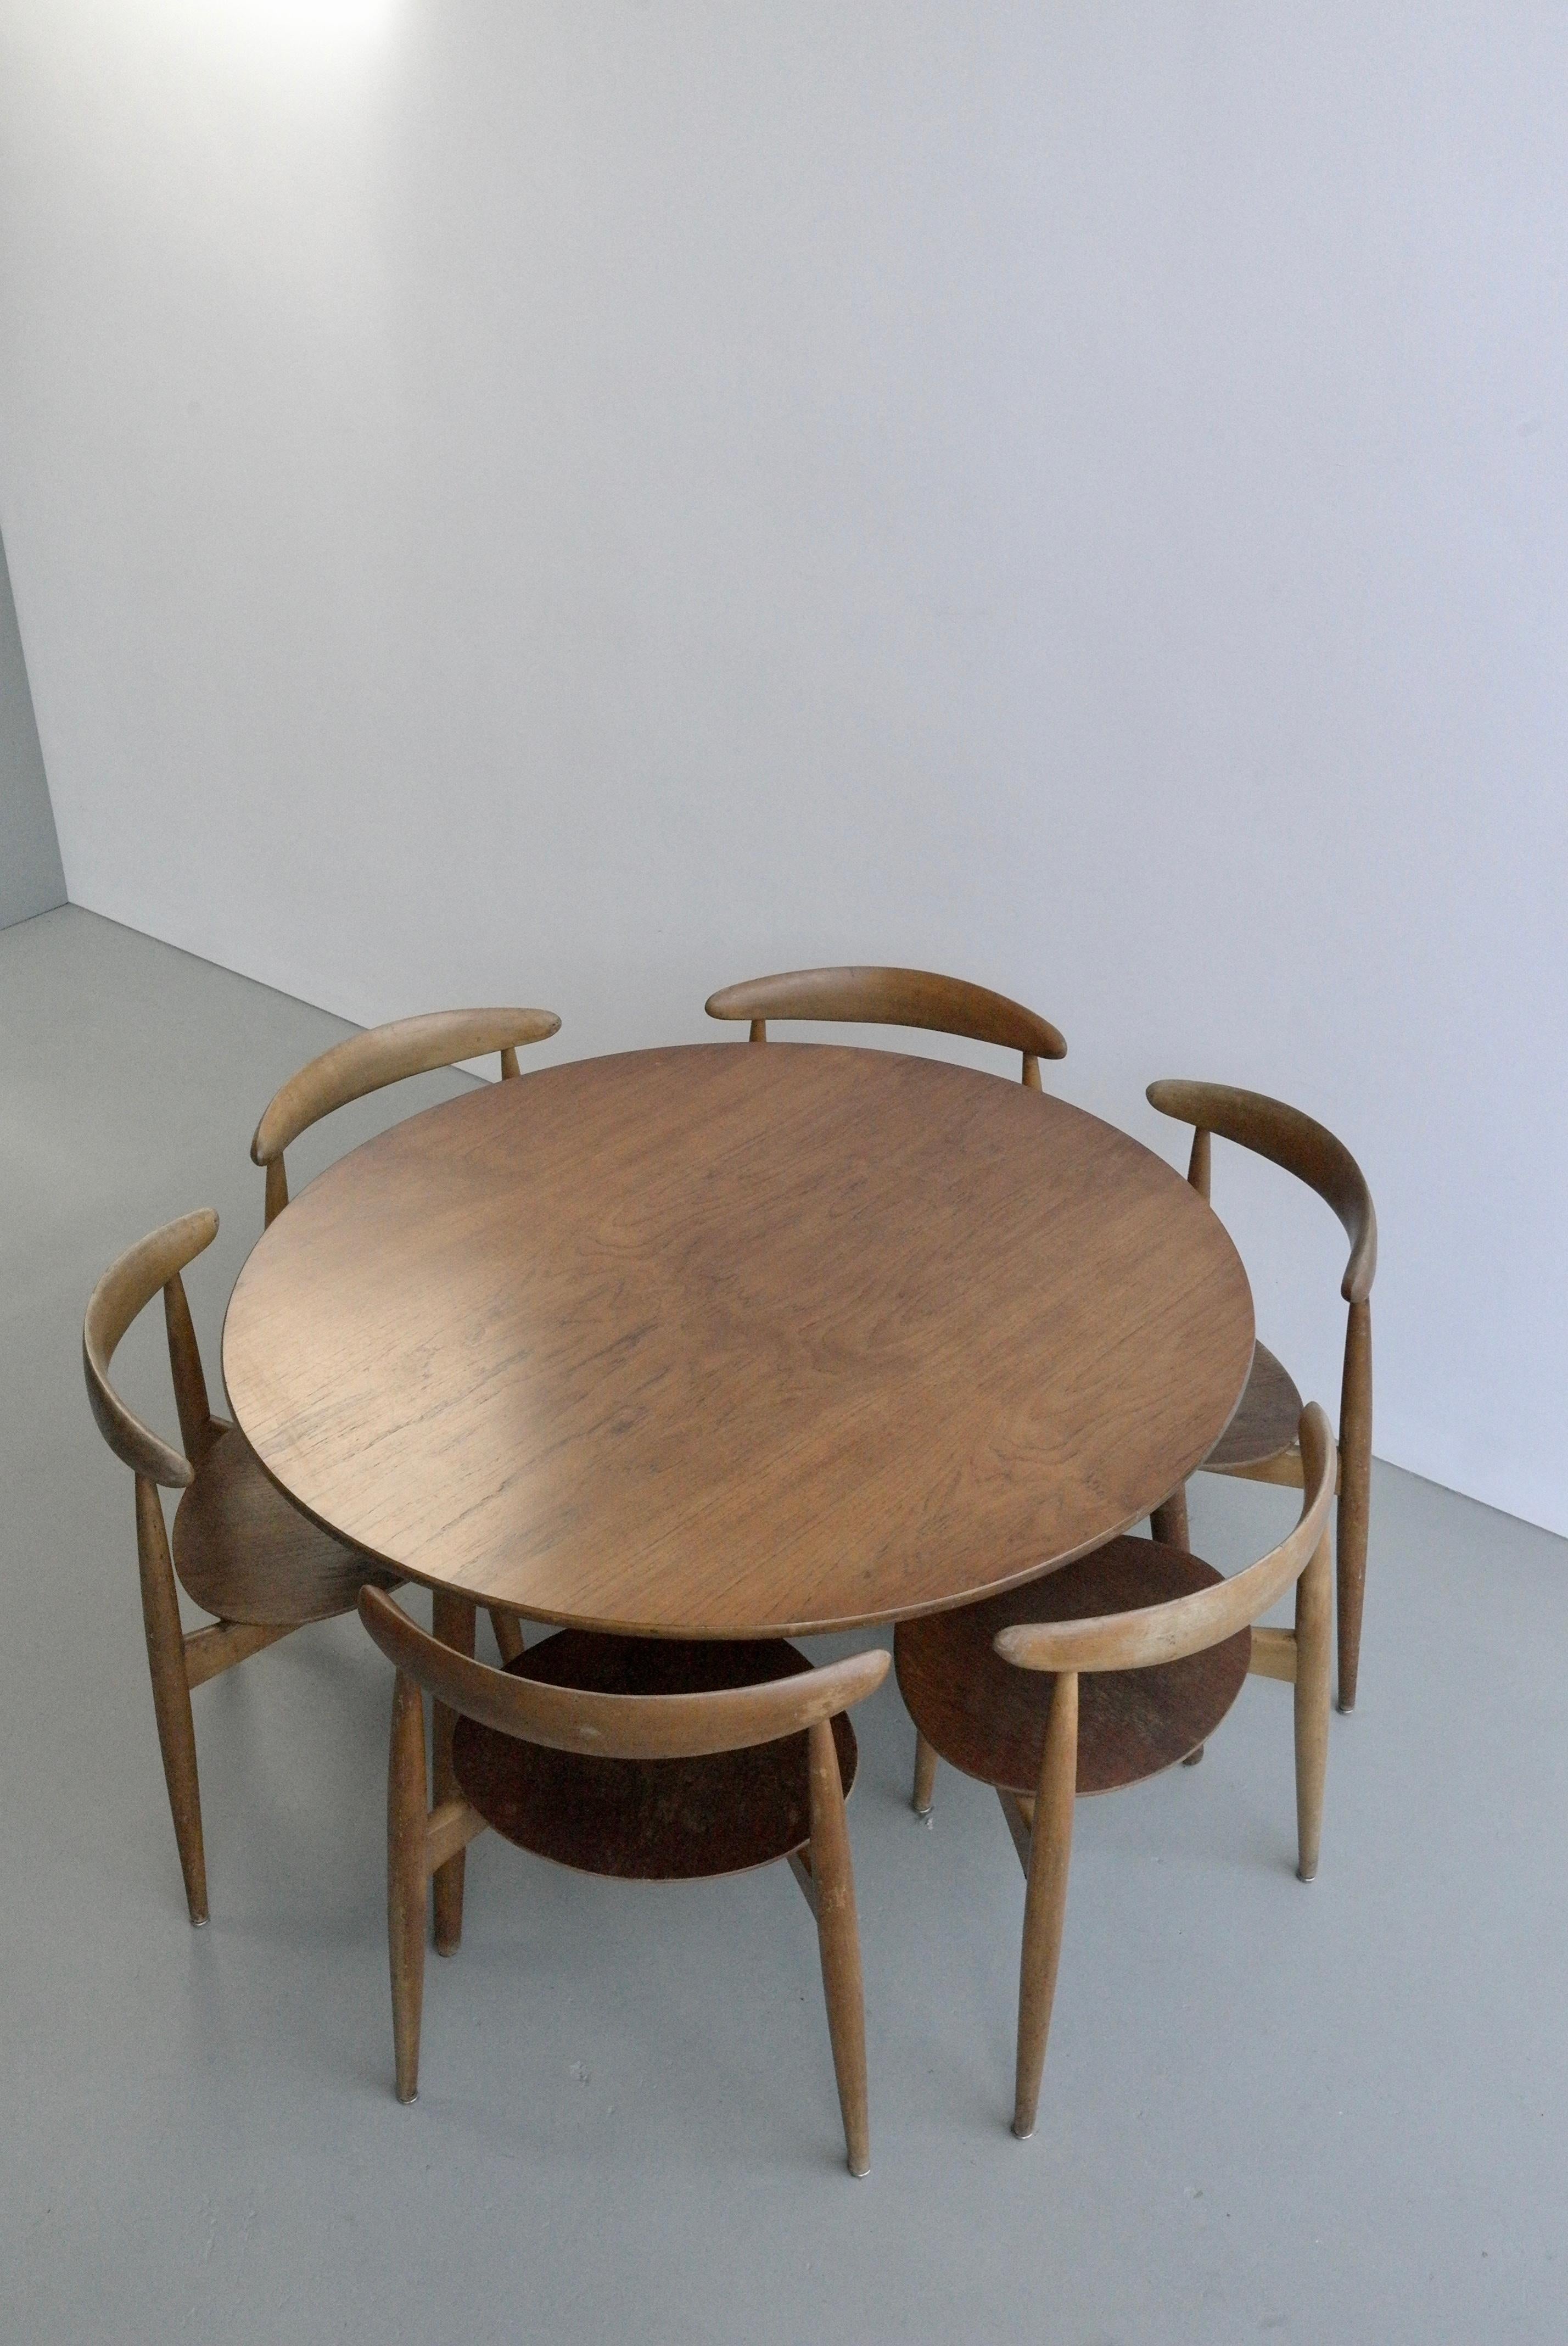 Hans Wegner Teak Dining Table and Six Heart Chairs by Fritz Hansen Denmark 1950s 5